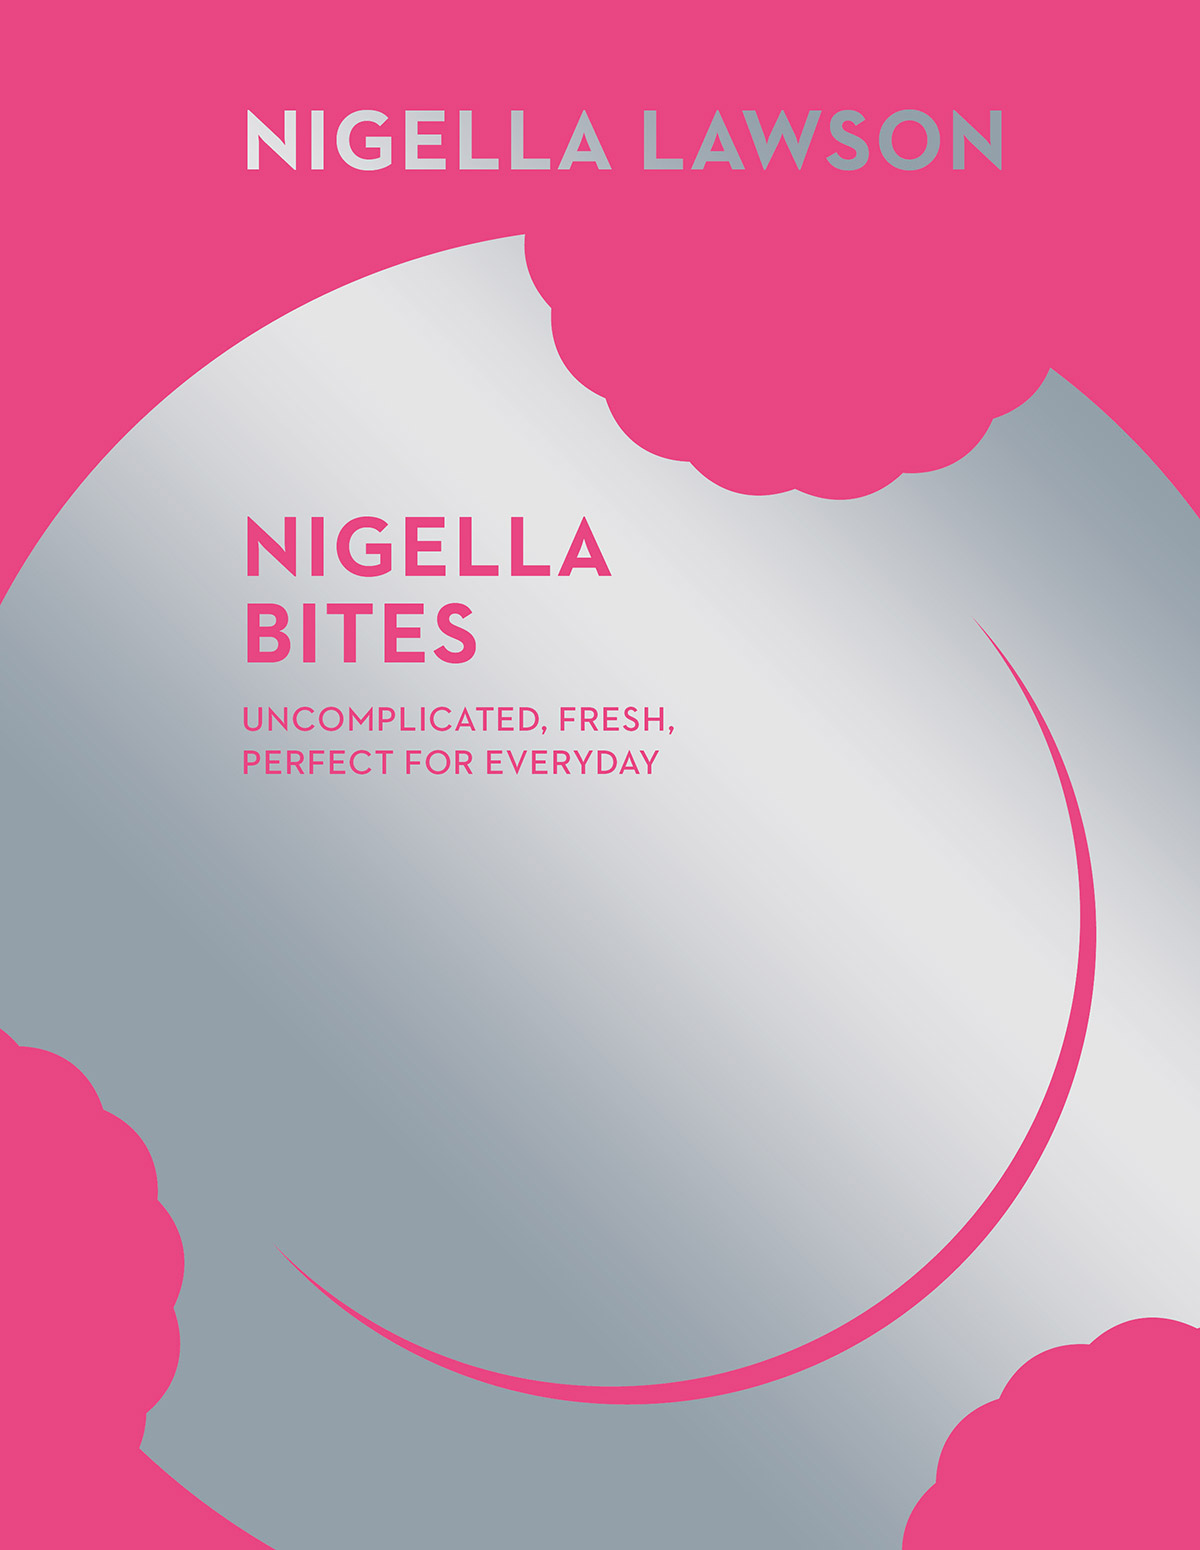 NIGELLA BITES UK book cover